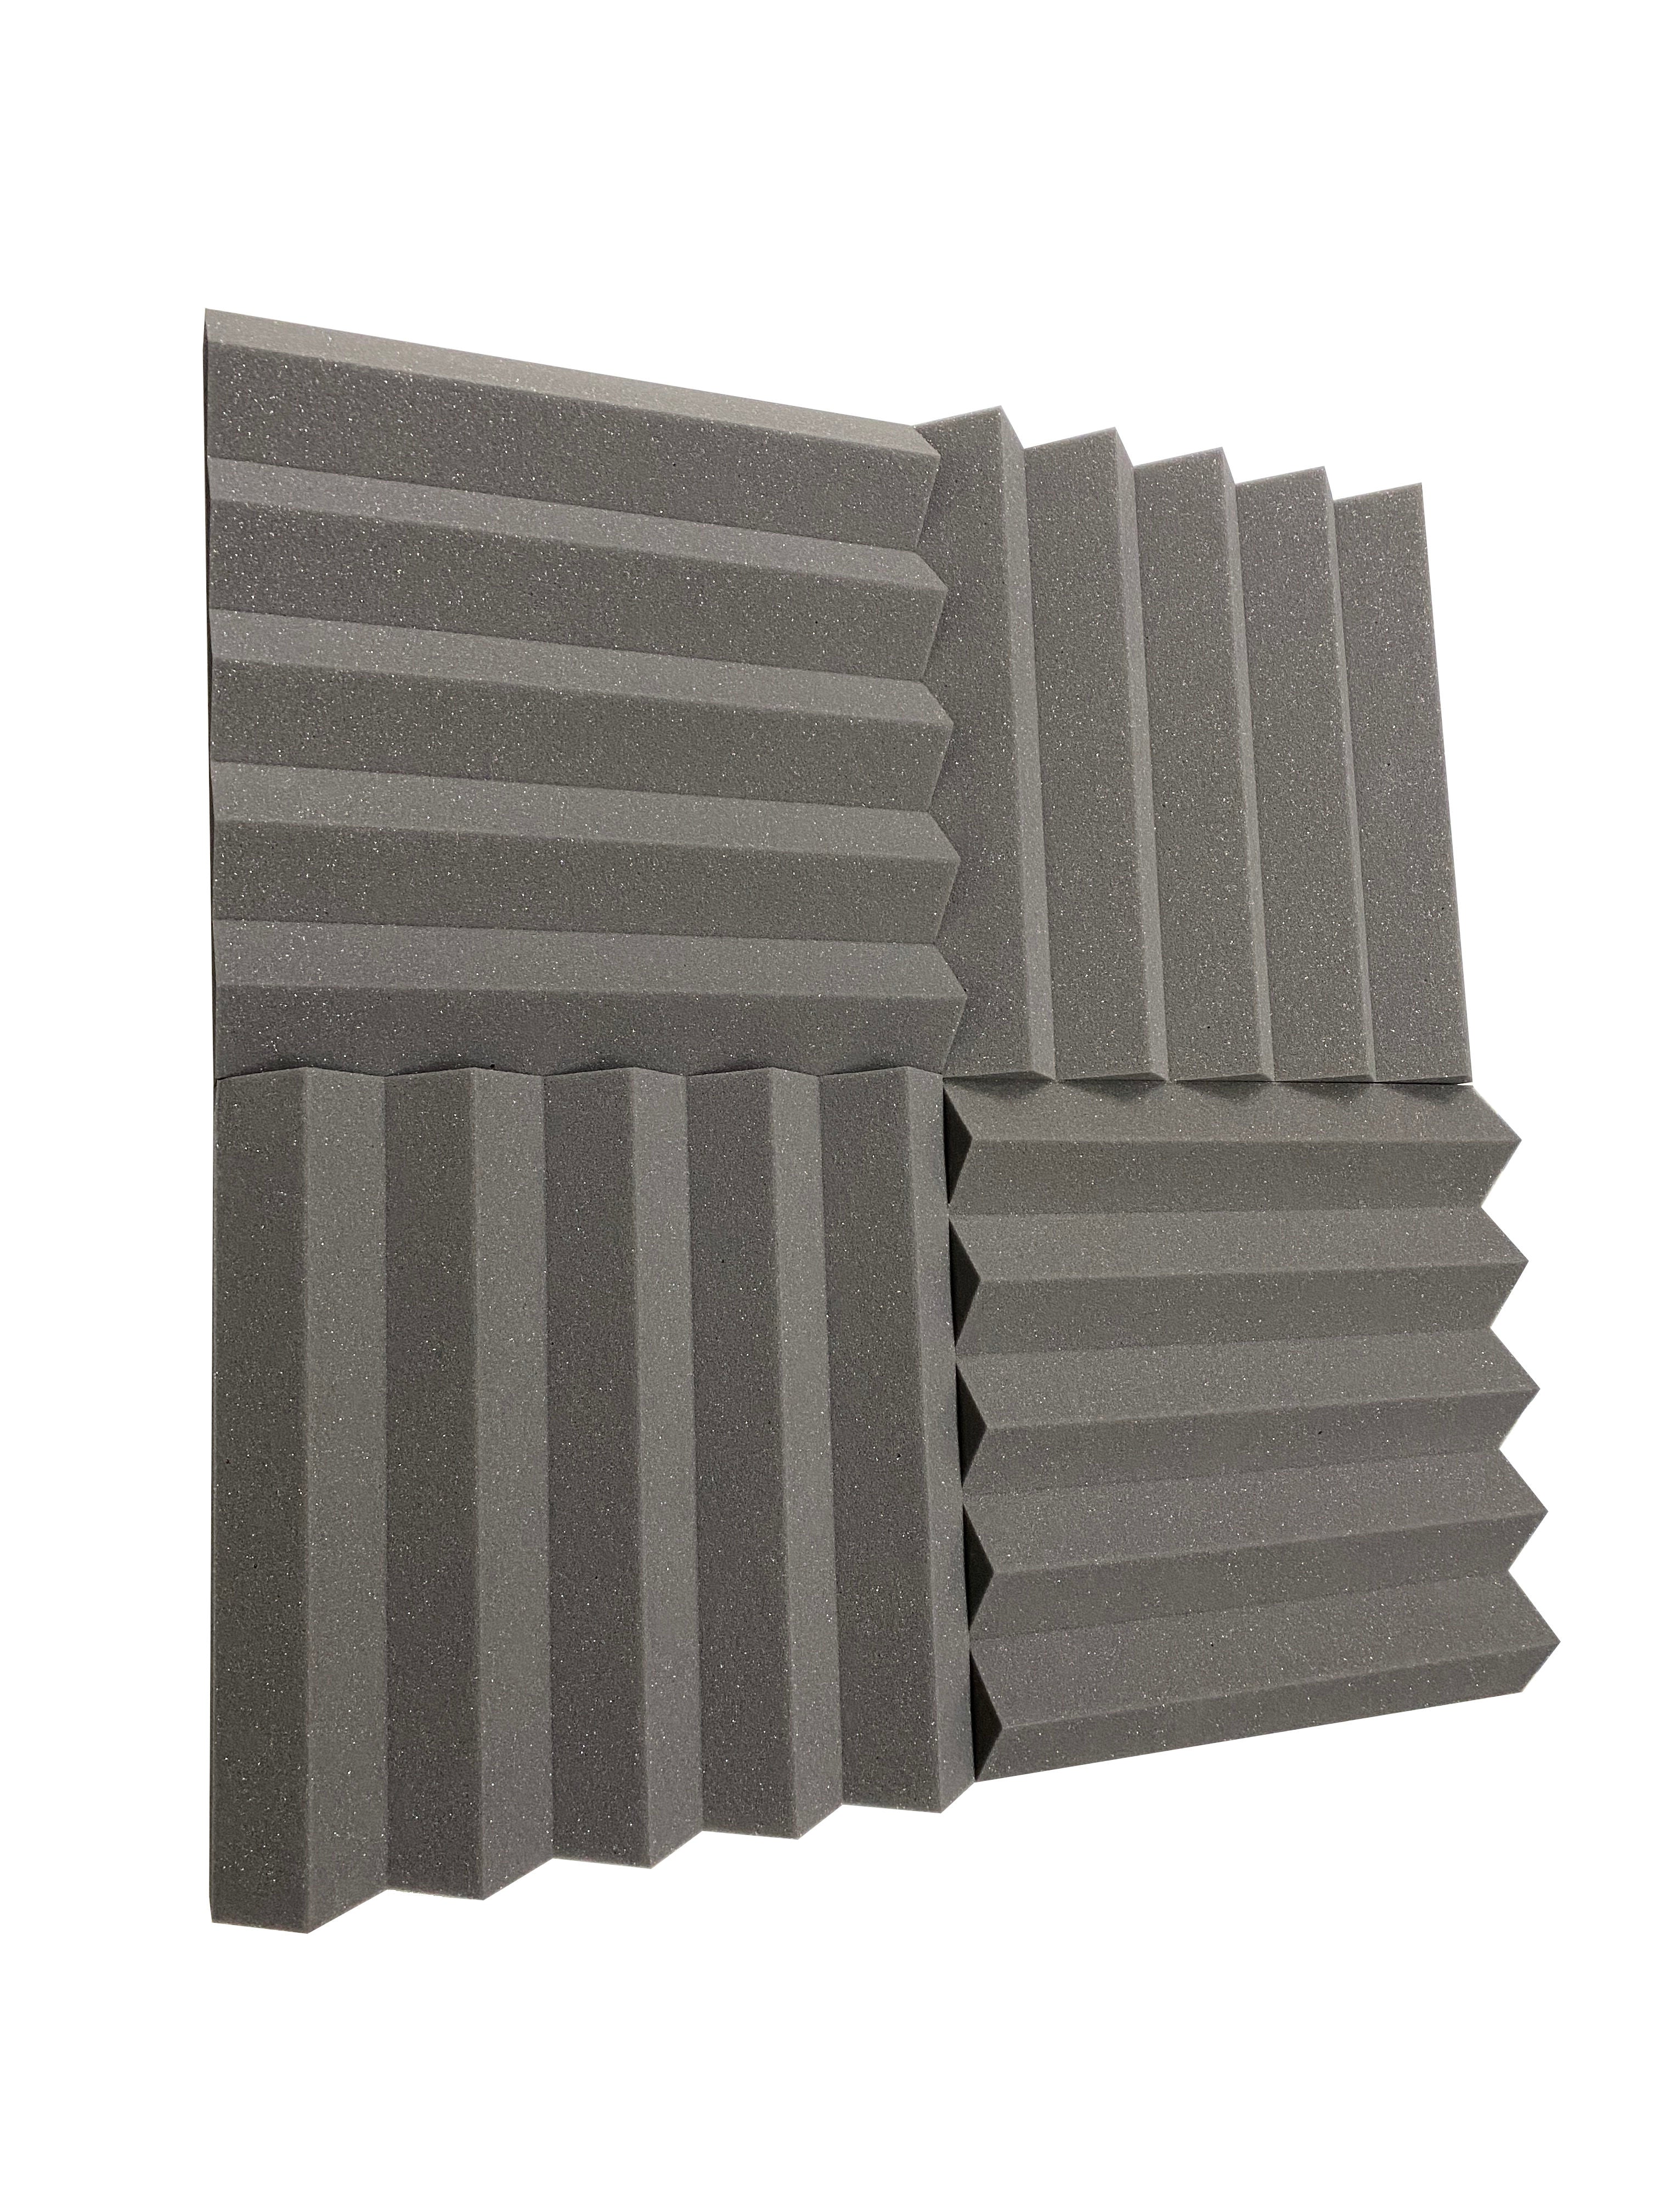 Wedge PRO 15" Acoustic Studio Foam Tile Kit – 72 Fliesen, 10,44 m² Abdeckung